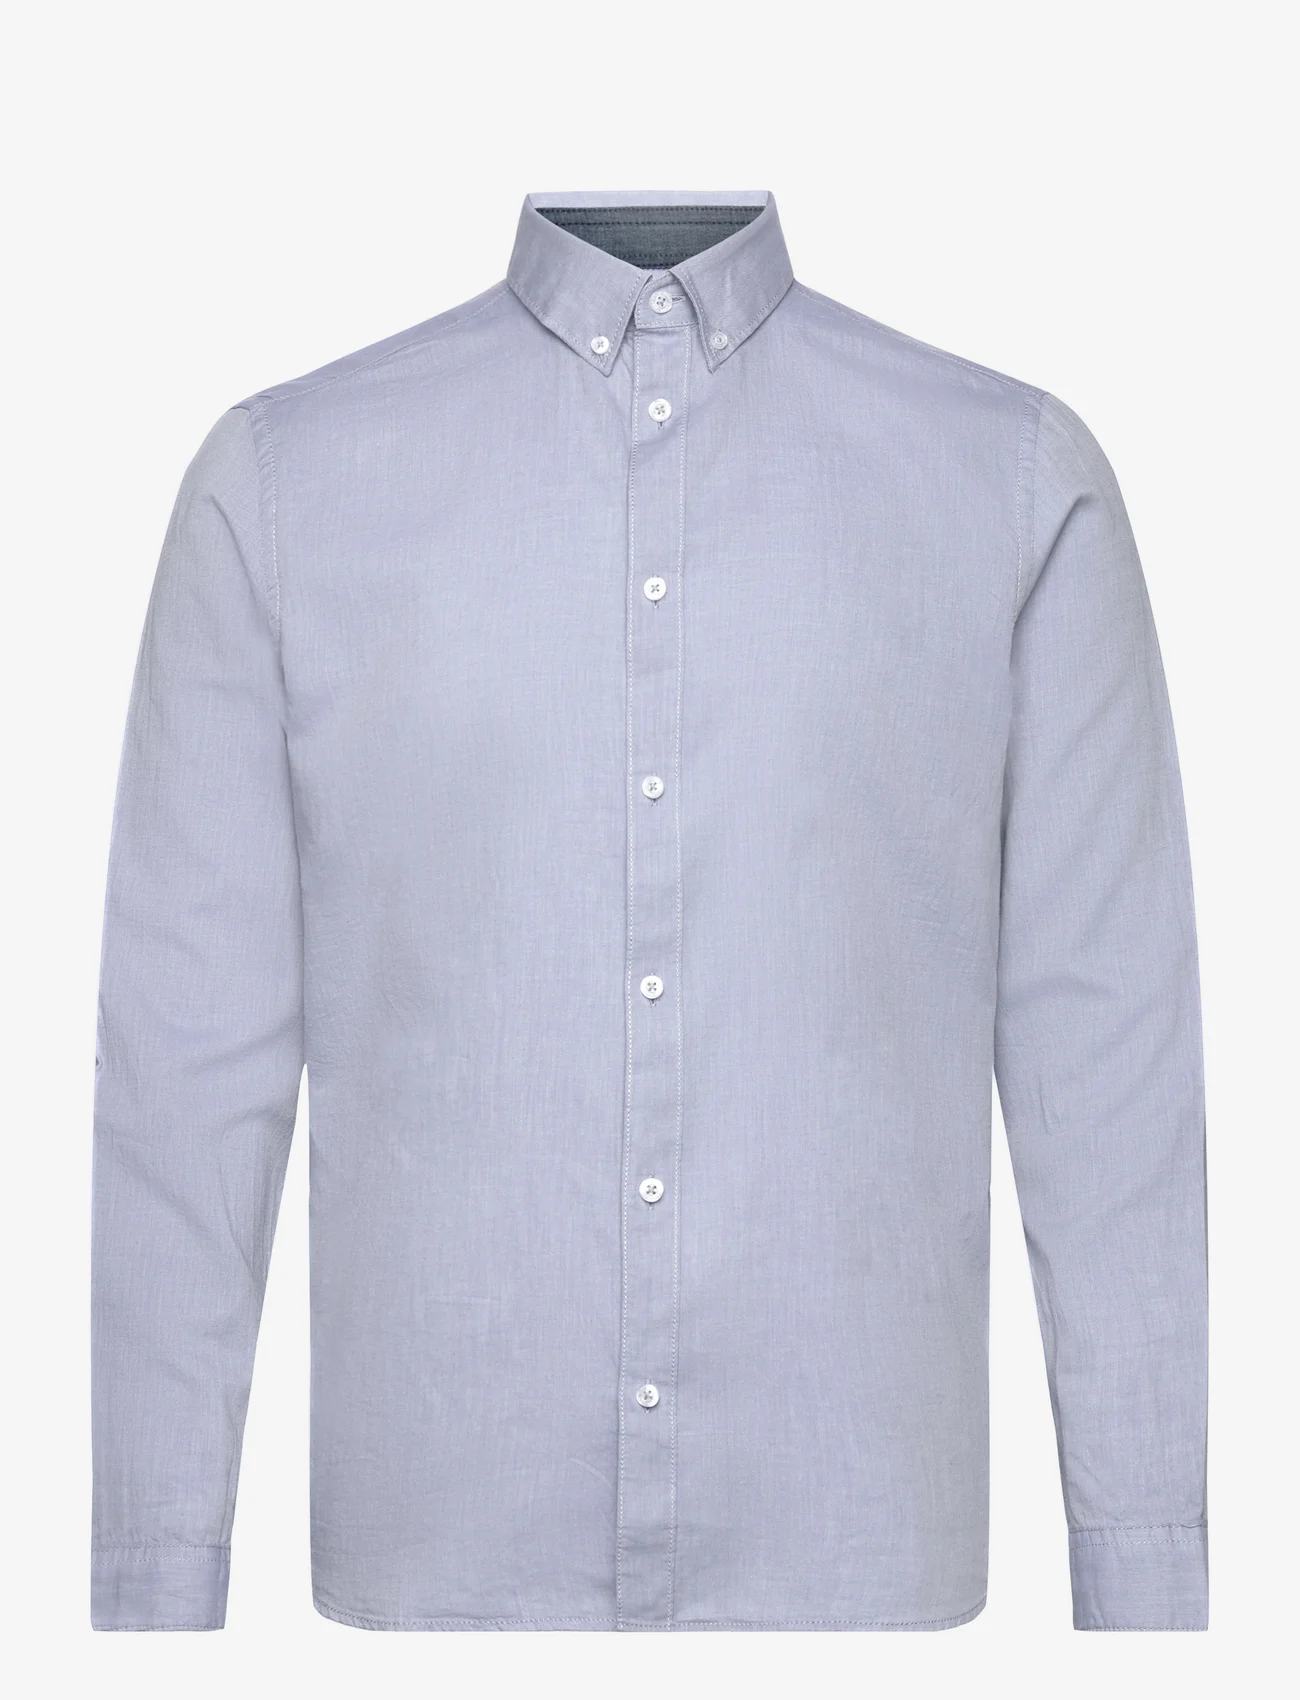 Tom Tailor - smart shirt - muodolliset kauluspaidat - greyish blue chambray - 0